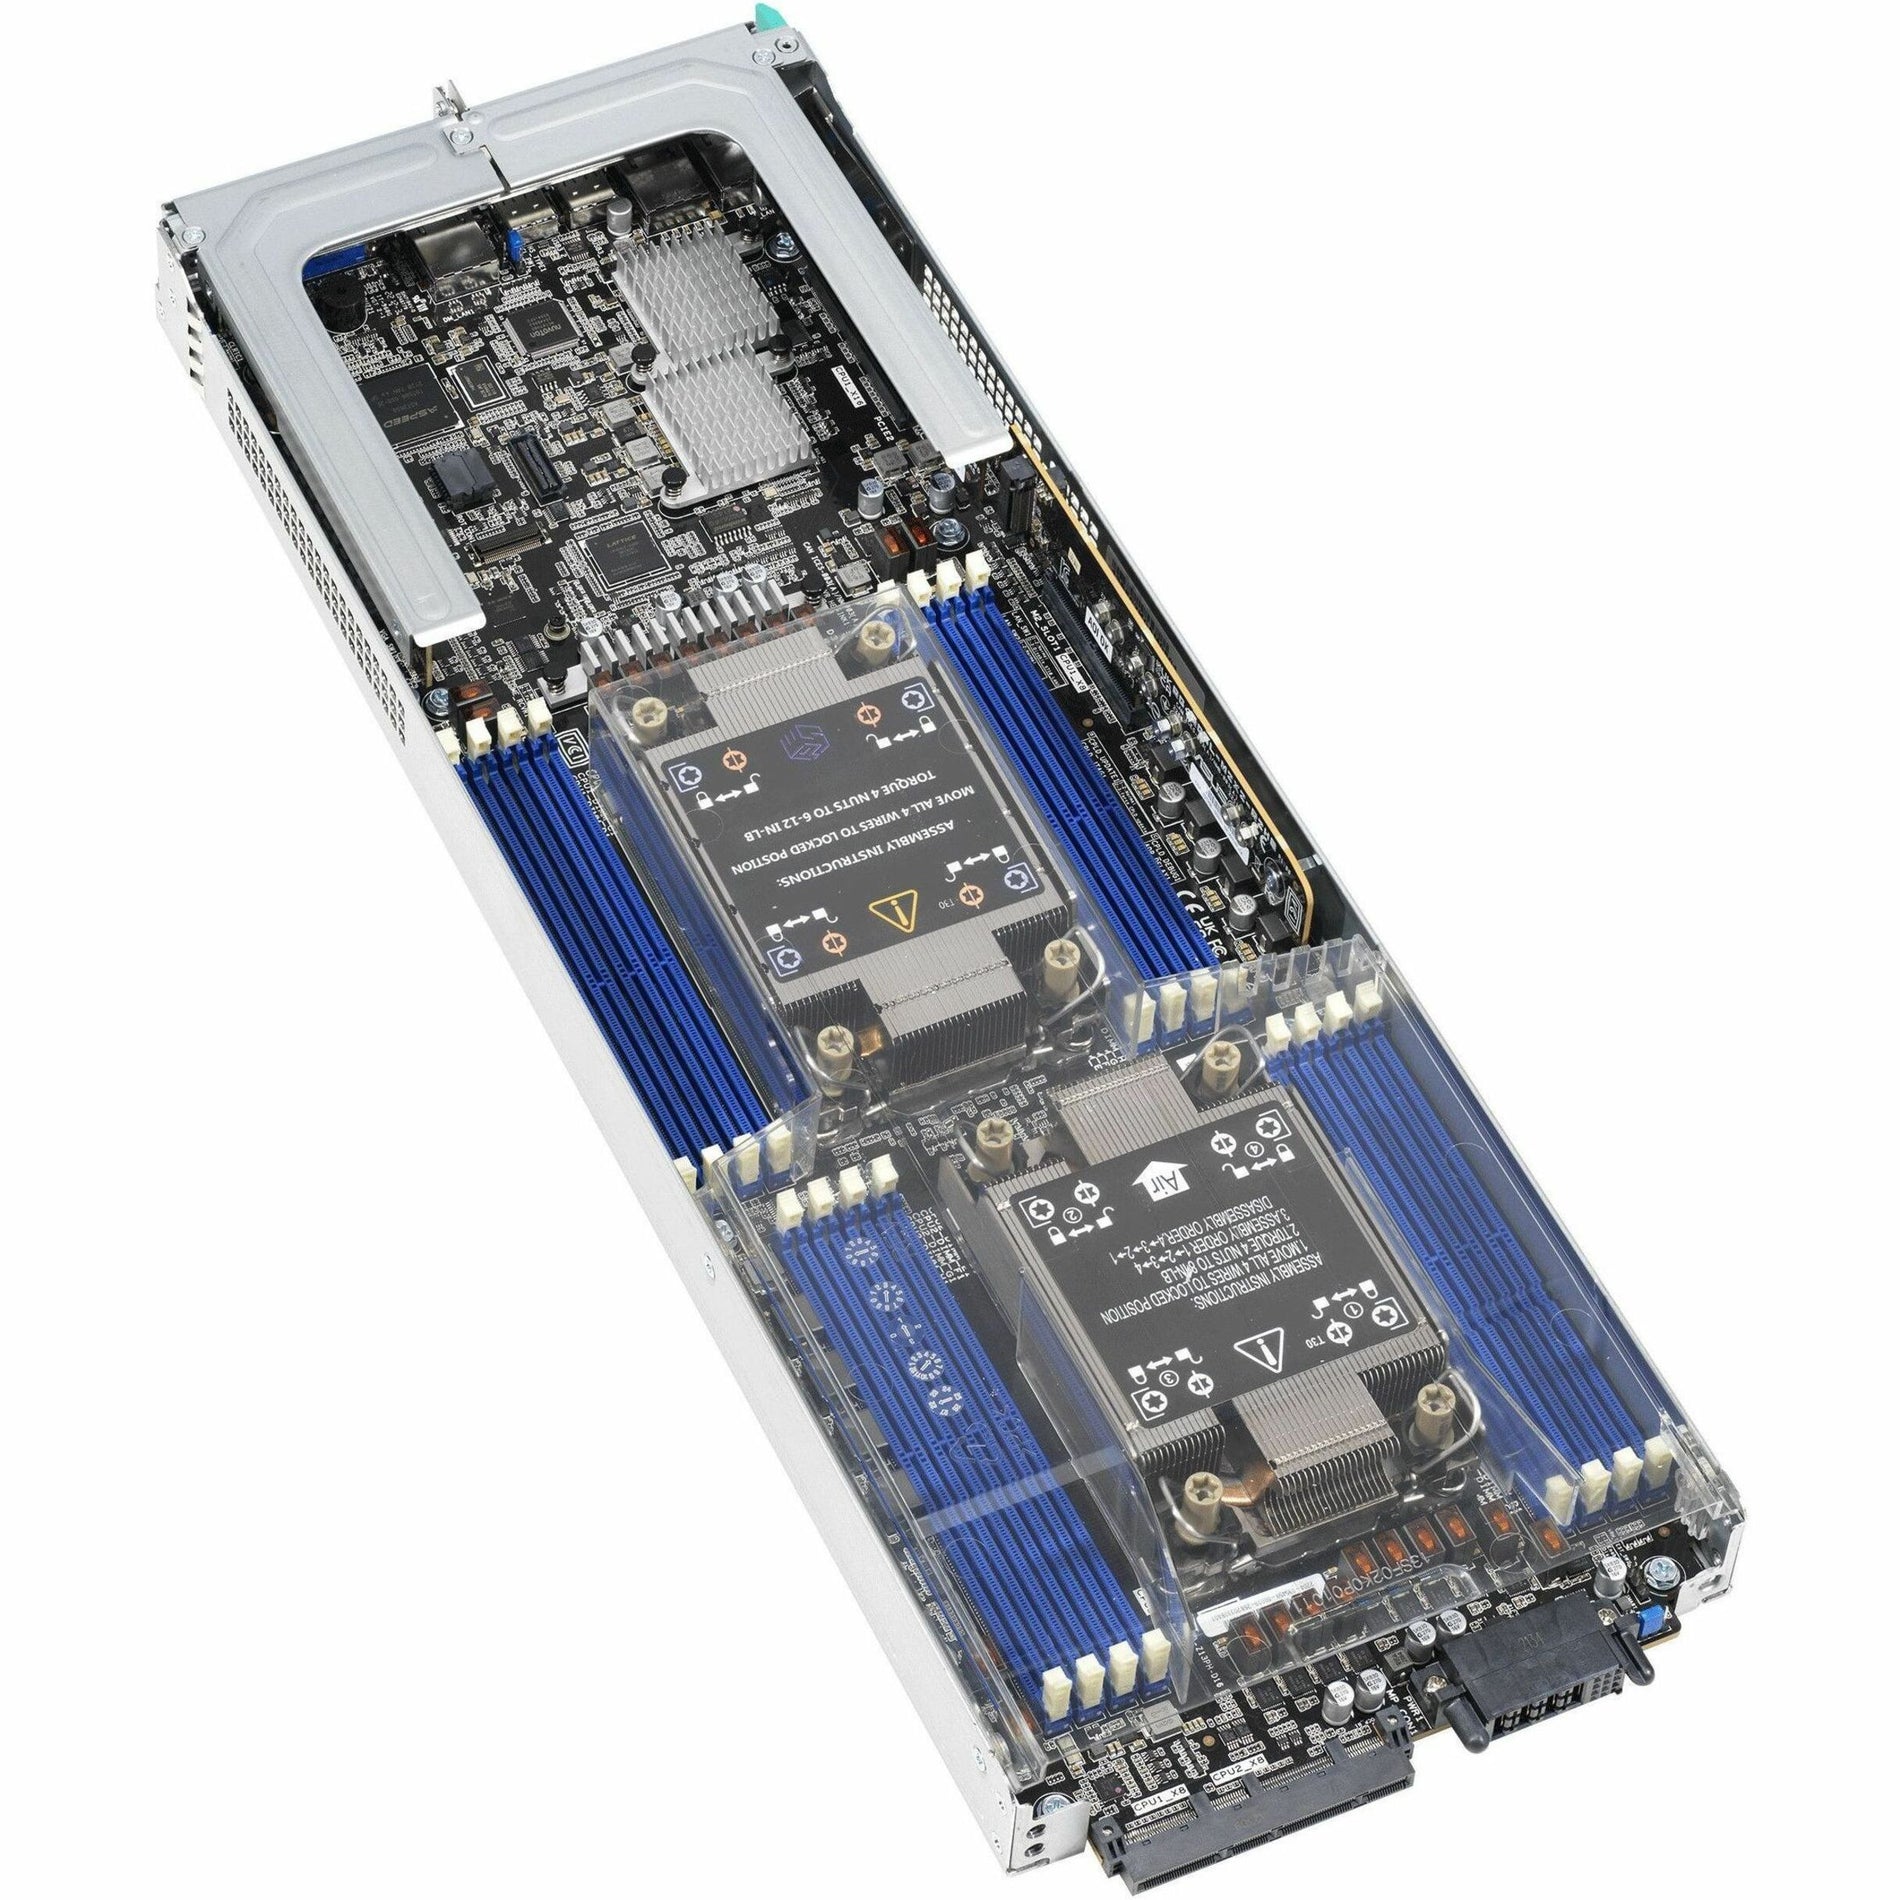 Asus RS720Q-E11-RS8U-3WSTEVHS Barebone System, Rack-mountable, 2U, 10 Gigabit Ethernet, 2x USB 3.0 Ports